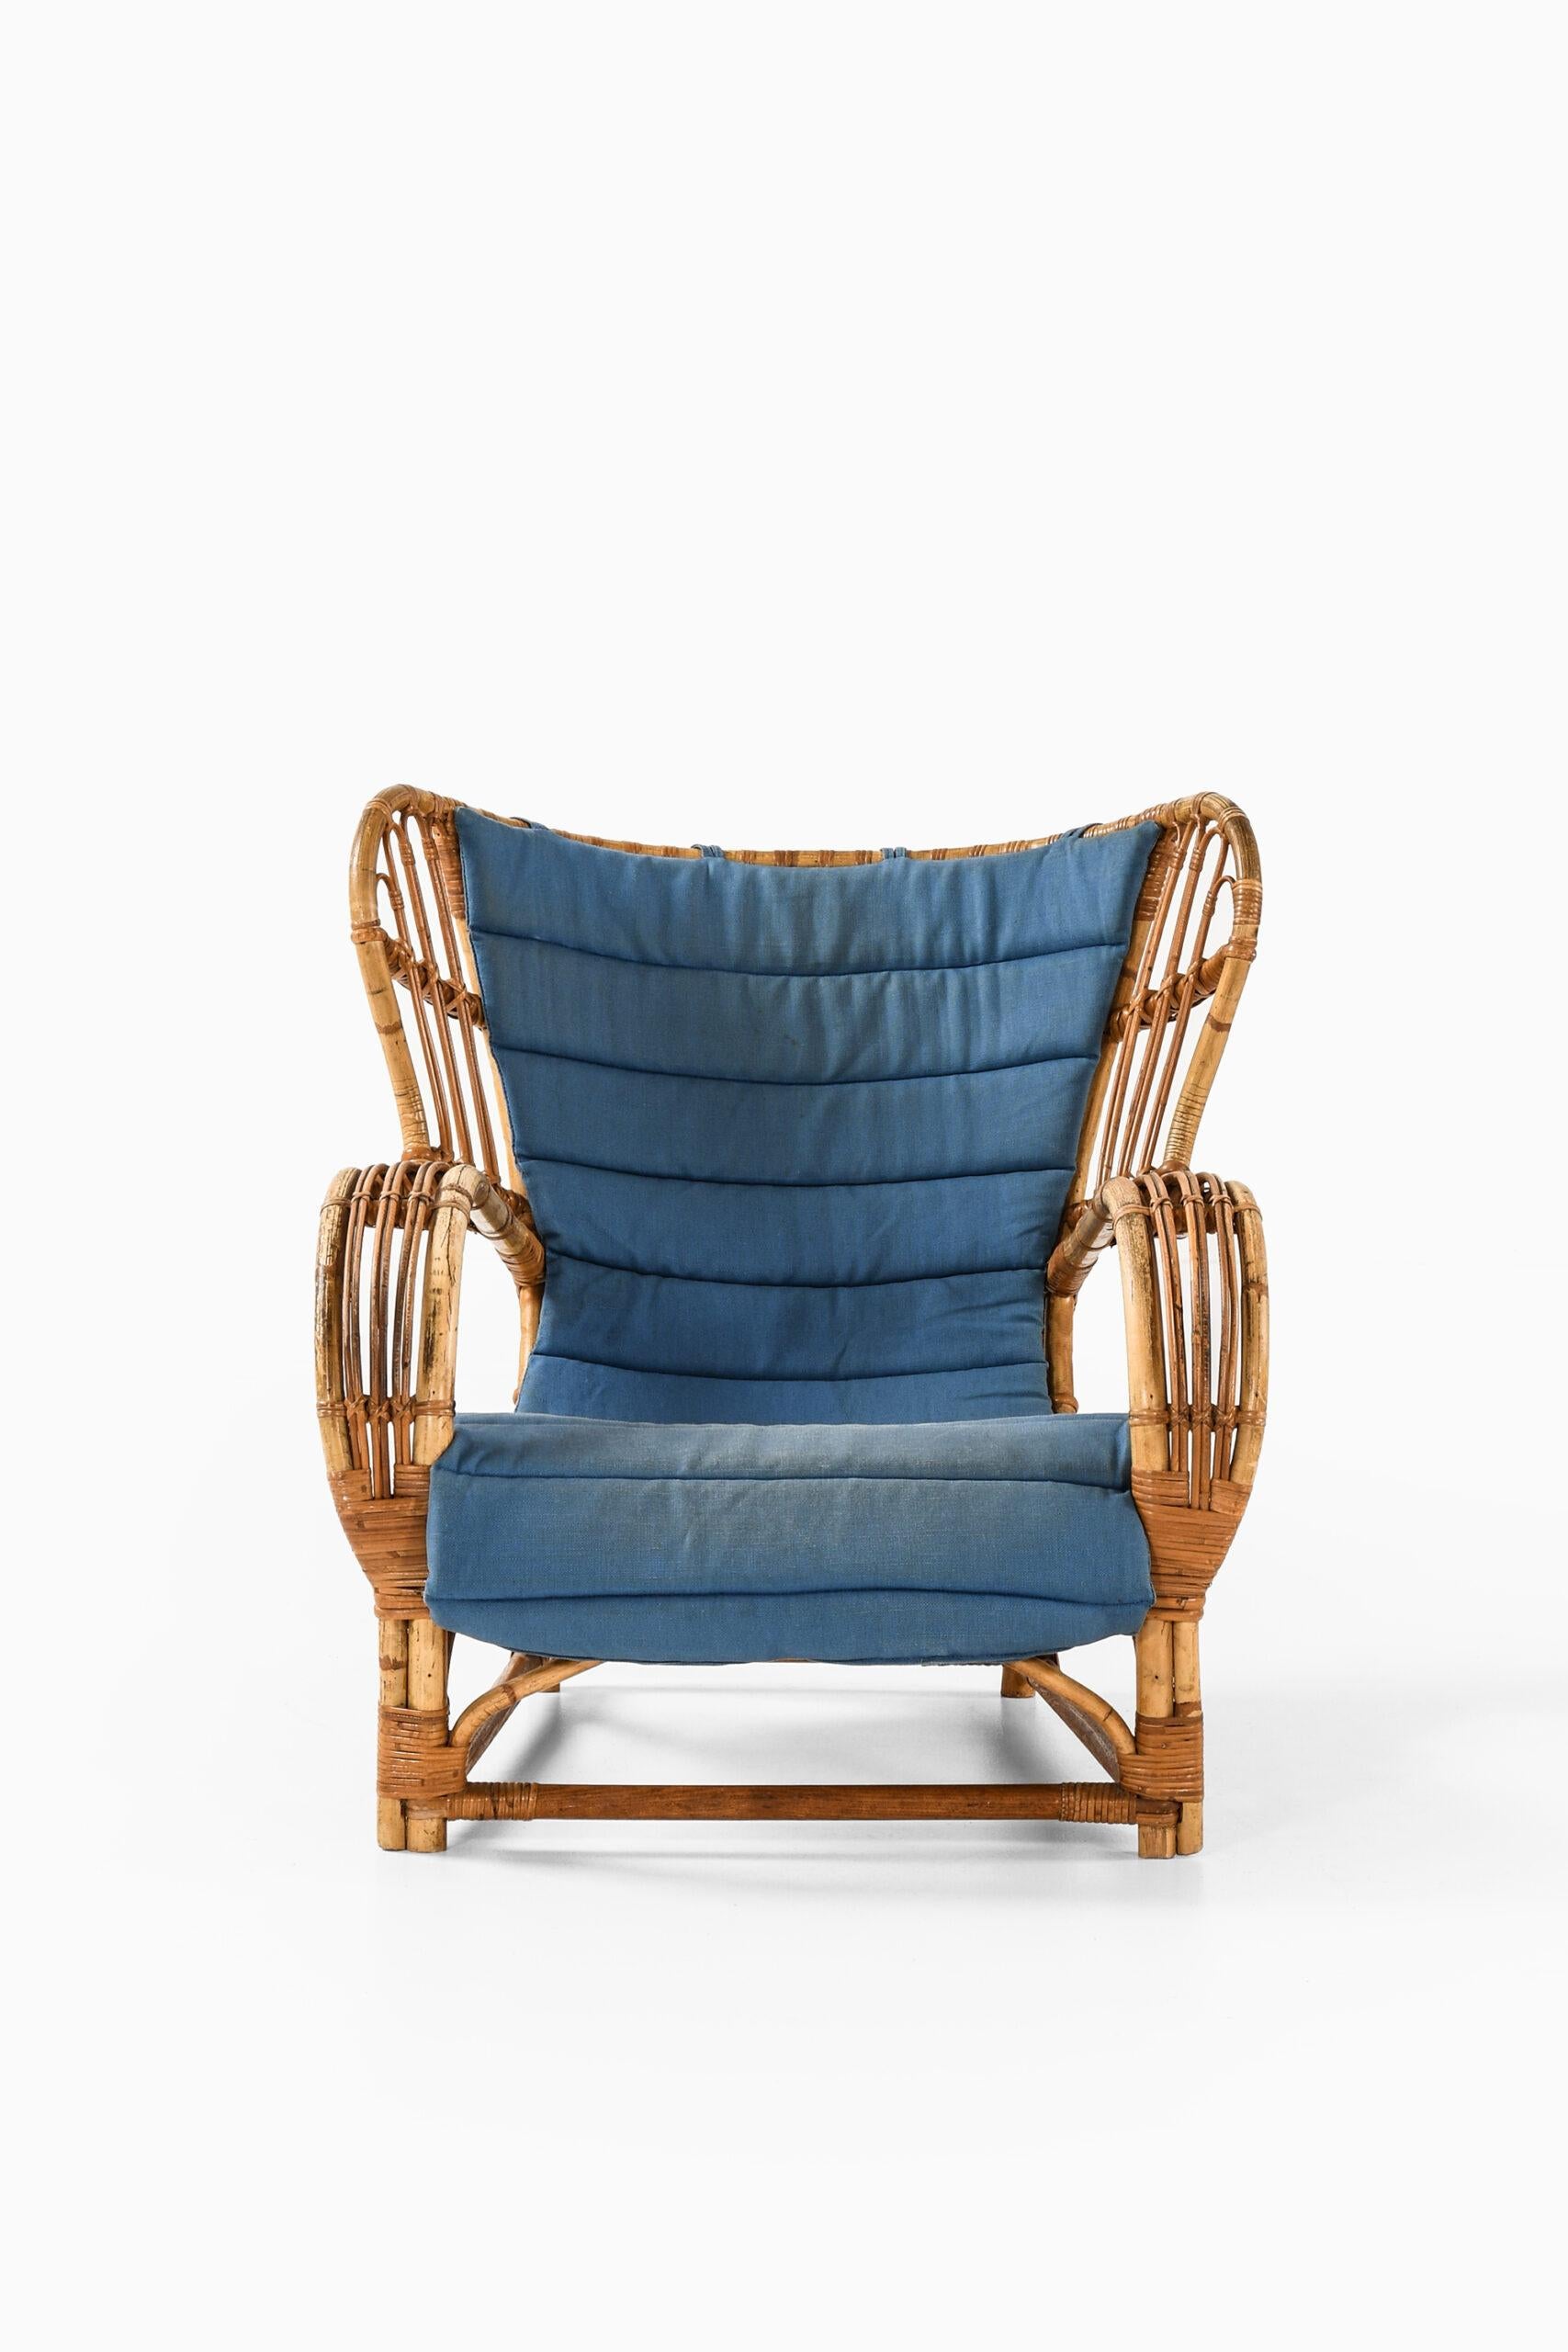 Rare easy chair designed by Viggo Boesen. Produced by R. Wengler in Denmark.